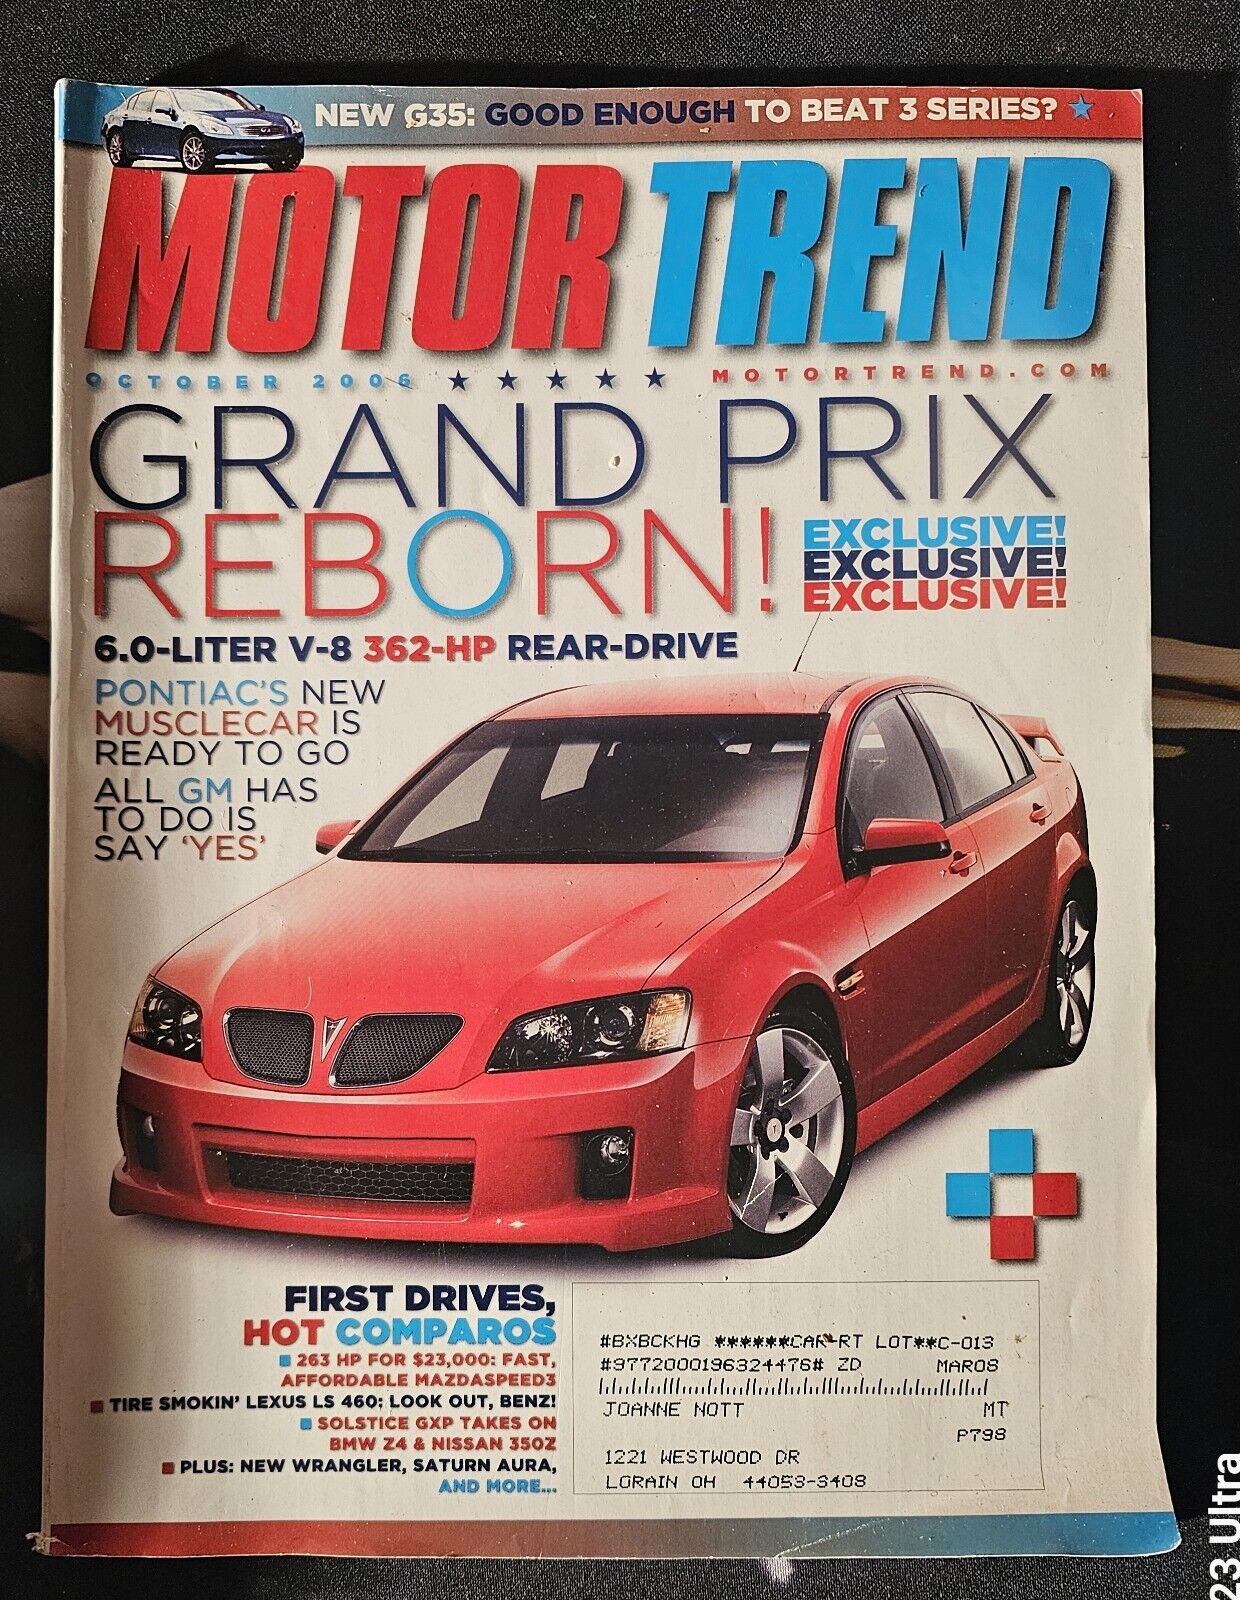 Motor Trend Oct 2006 - New Grand Prix, Saturn Aura, Solstice